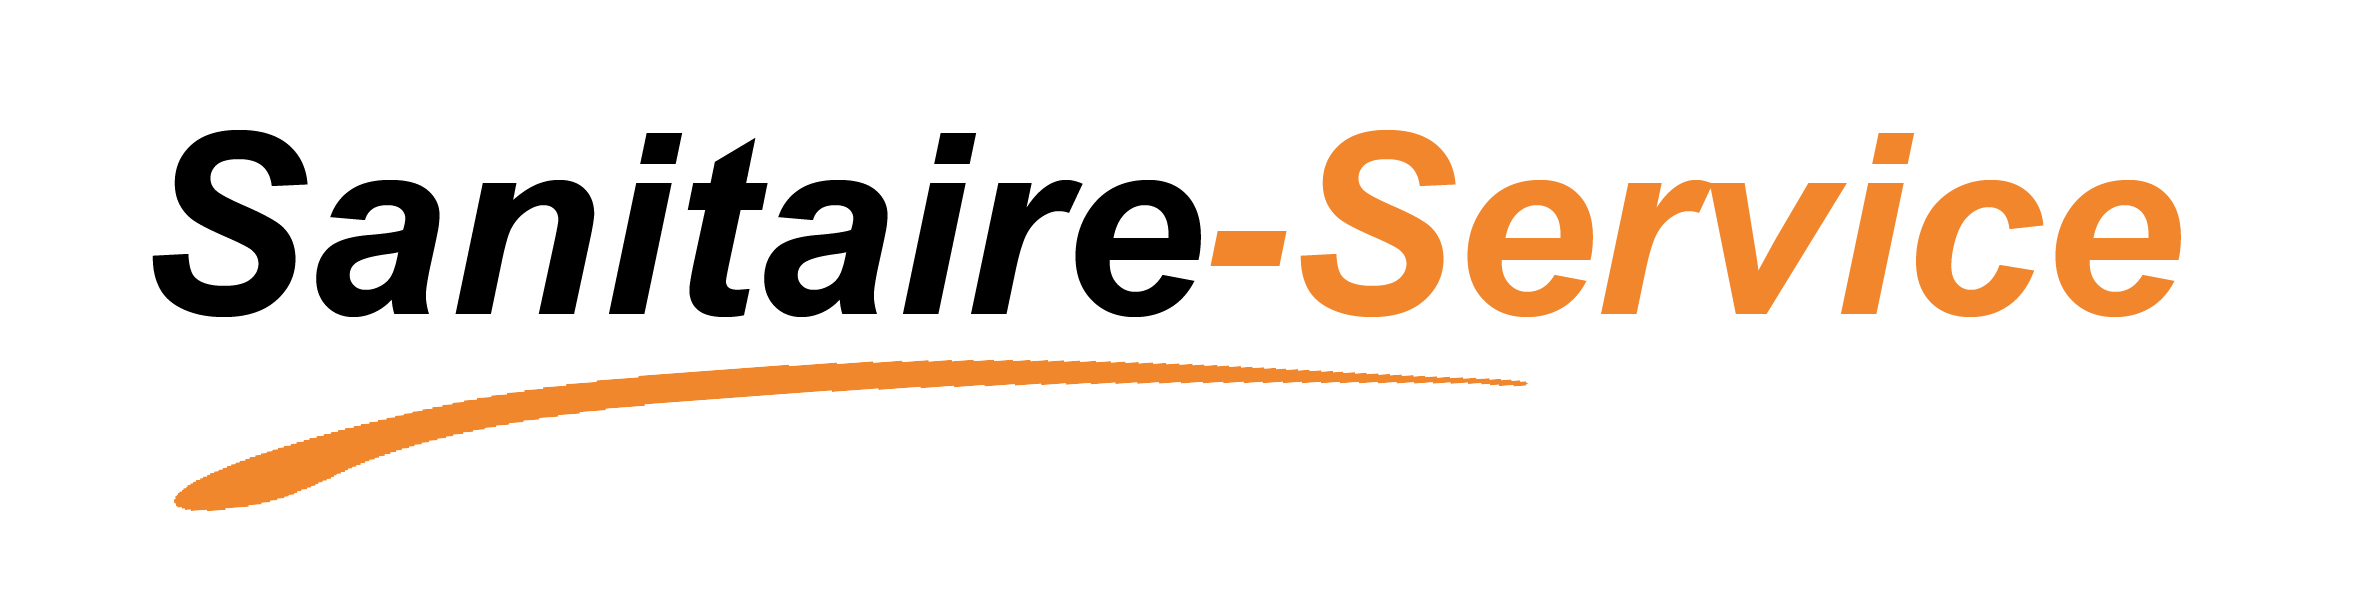 logo_sanitaire_service.jpeg